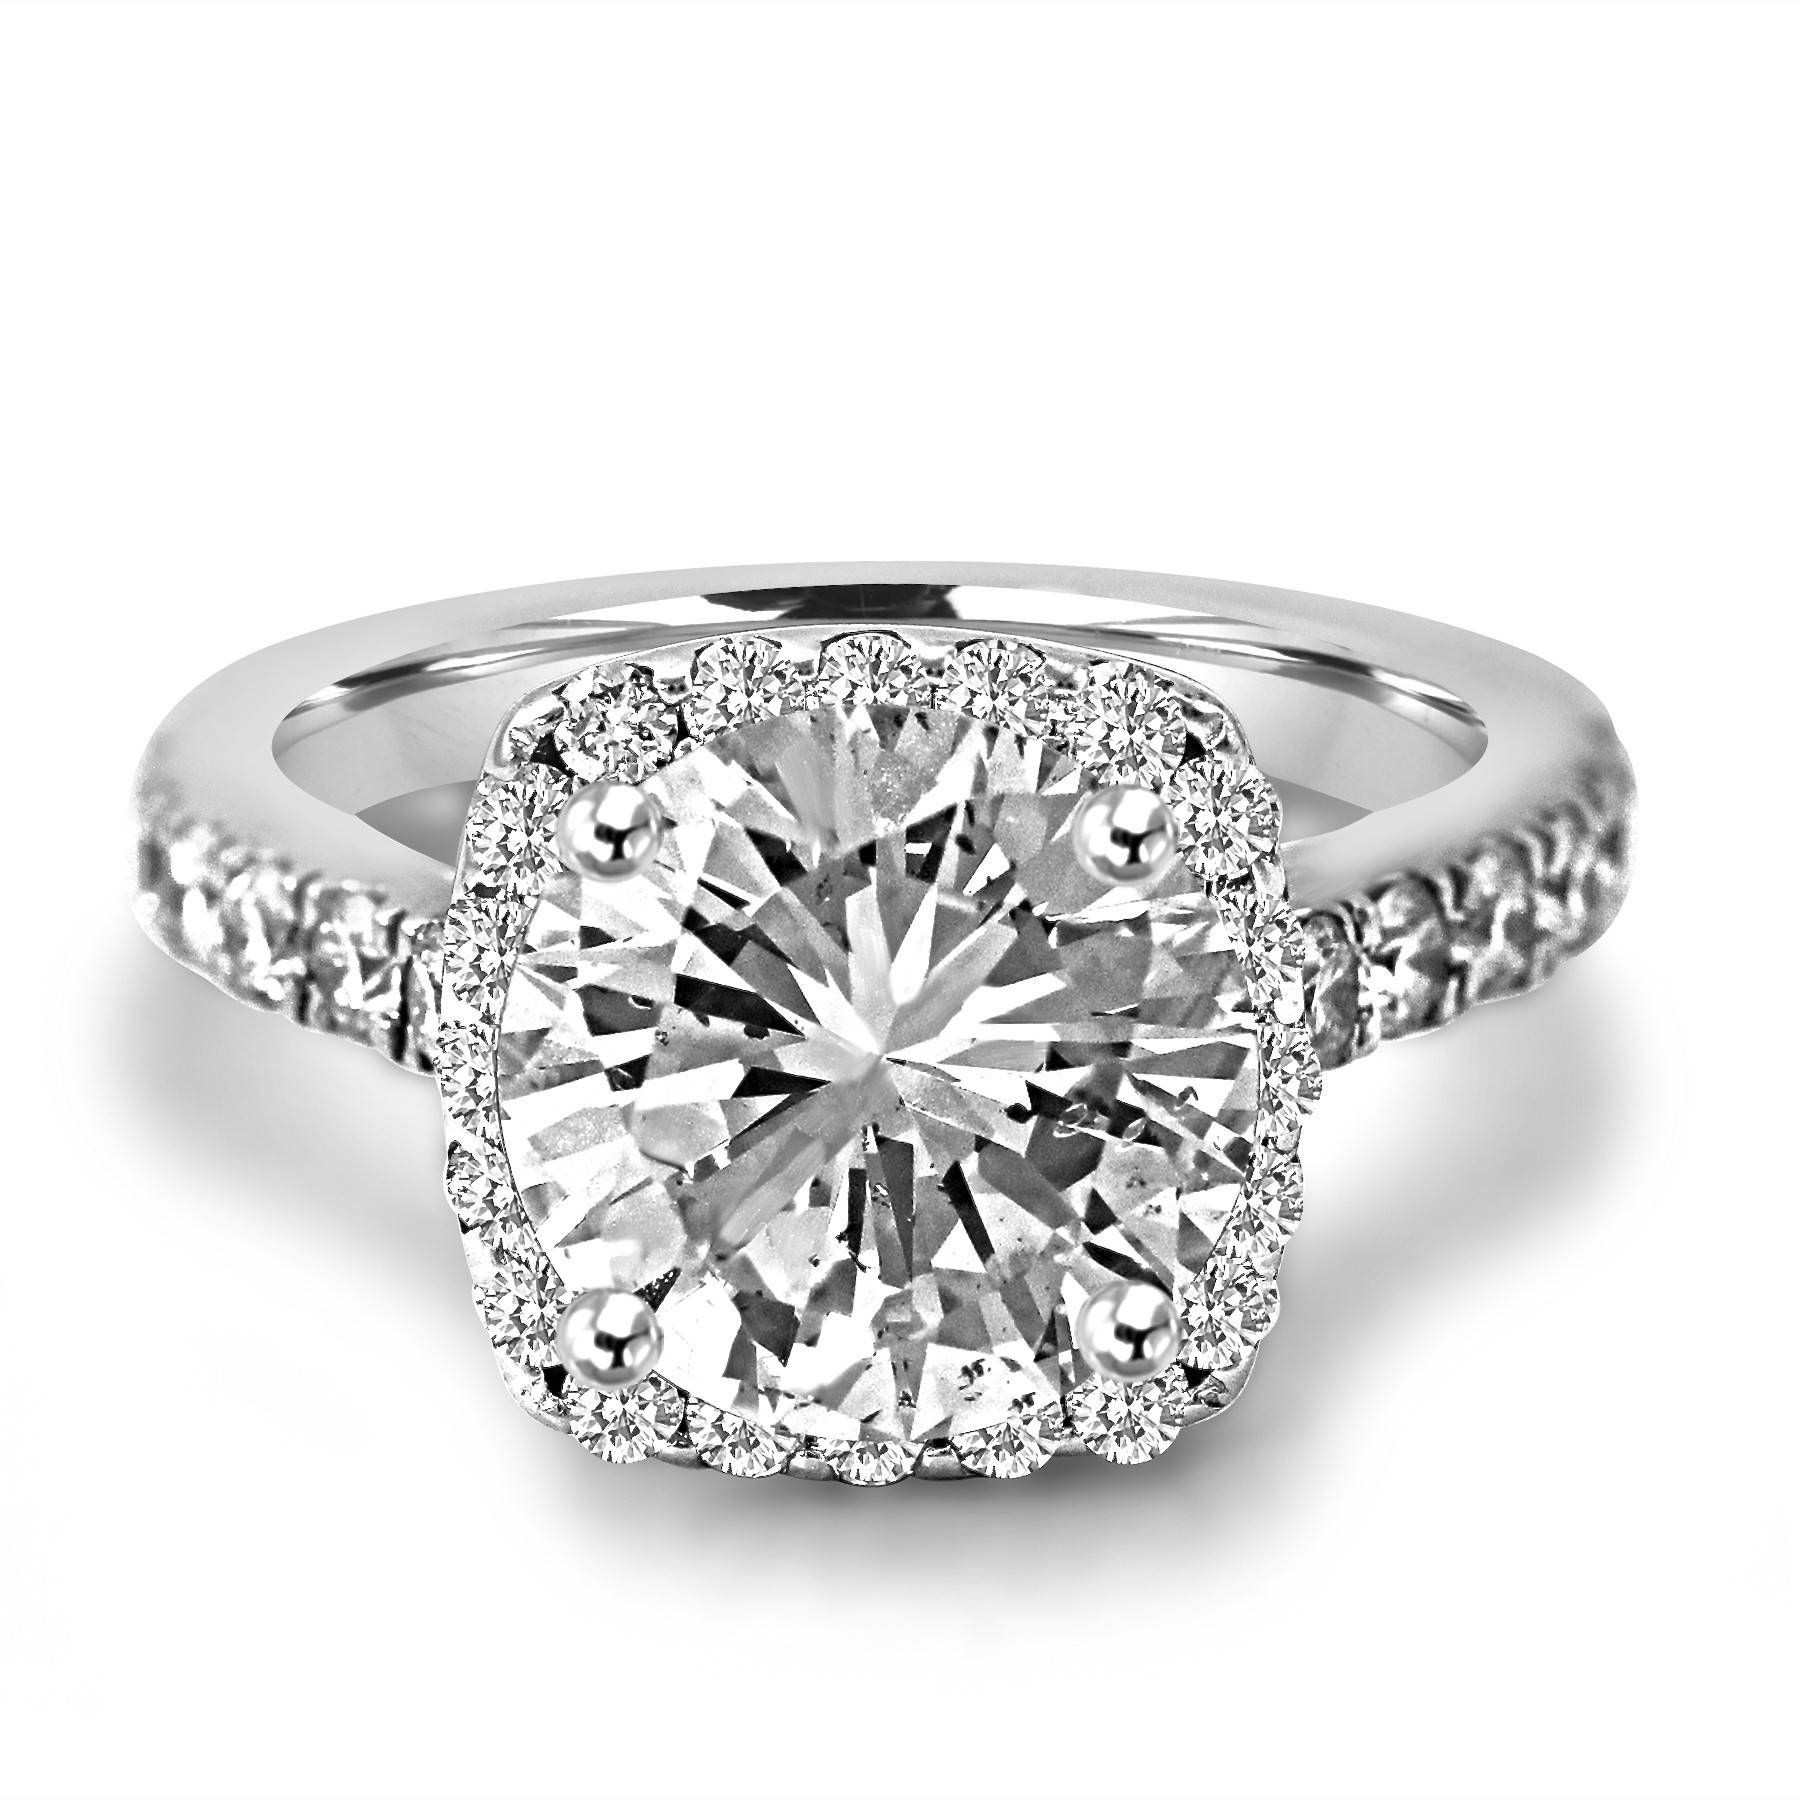 Jean Pierre Jewelers Regarding Round Cushion Cut Diamond Engagement Rings (View 8 of 15)